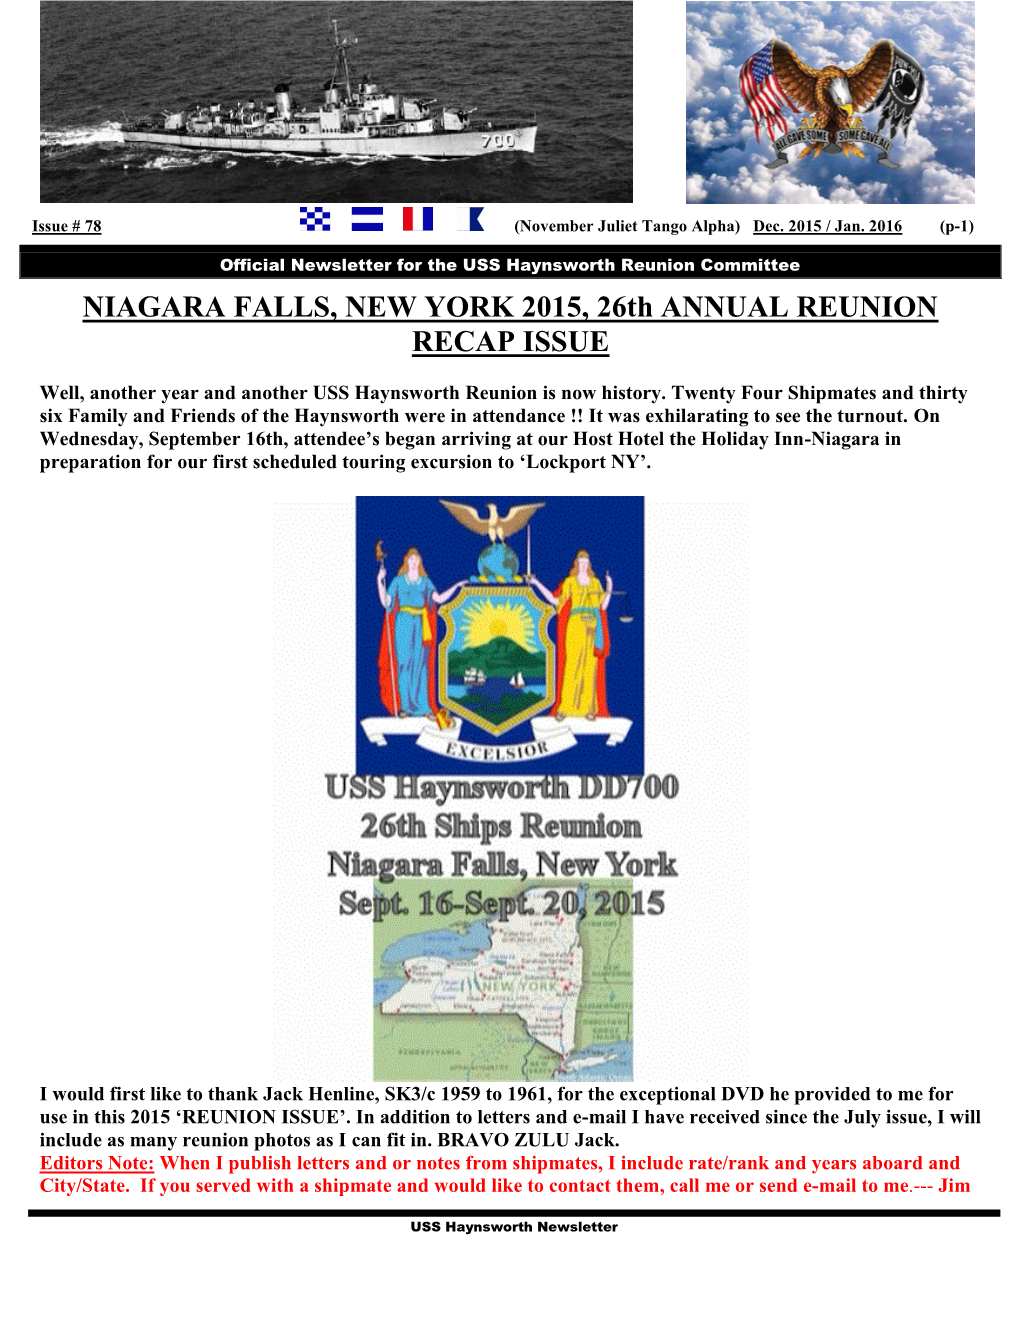 NIAGARA FALLS, NEW YORK 2015, 26Th ANNUAL REUNION RECAP ISSUE